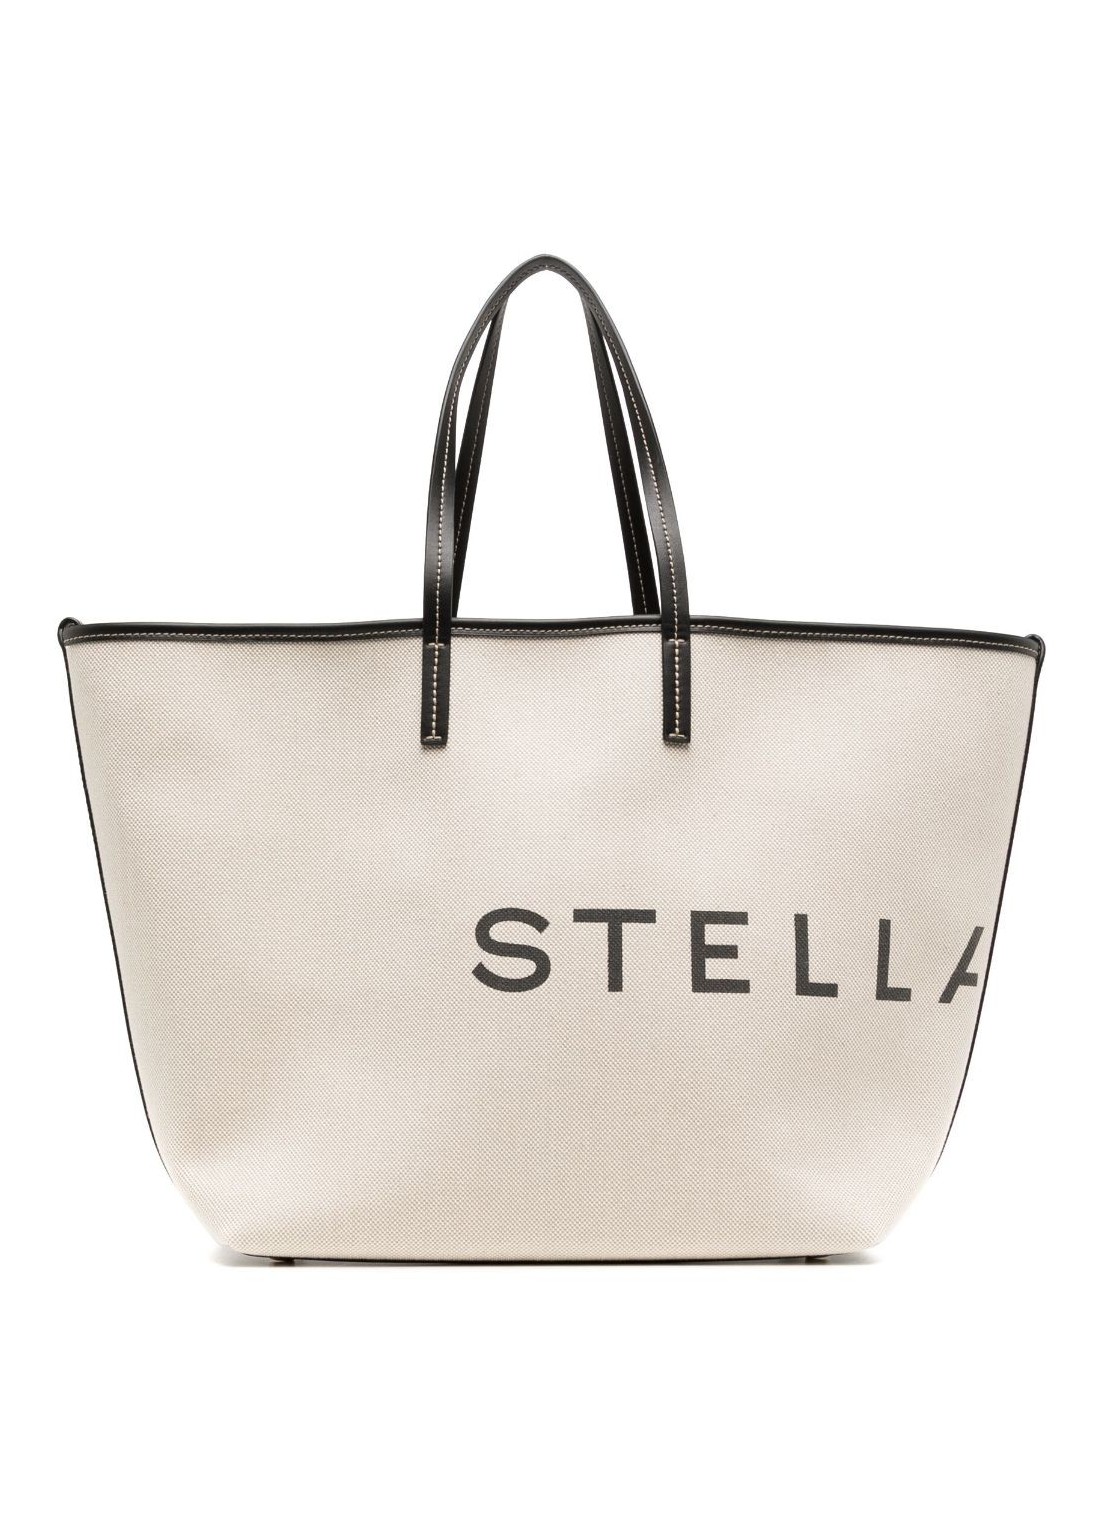 Handbag stella mccartney handbag woman tote bag eco salt and pepper canvas 7b0048wp0221 9043 talla T